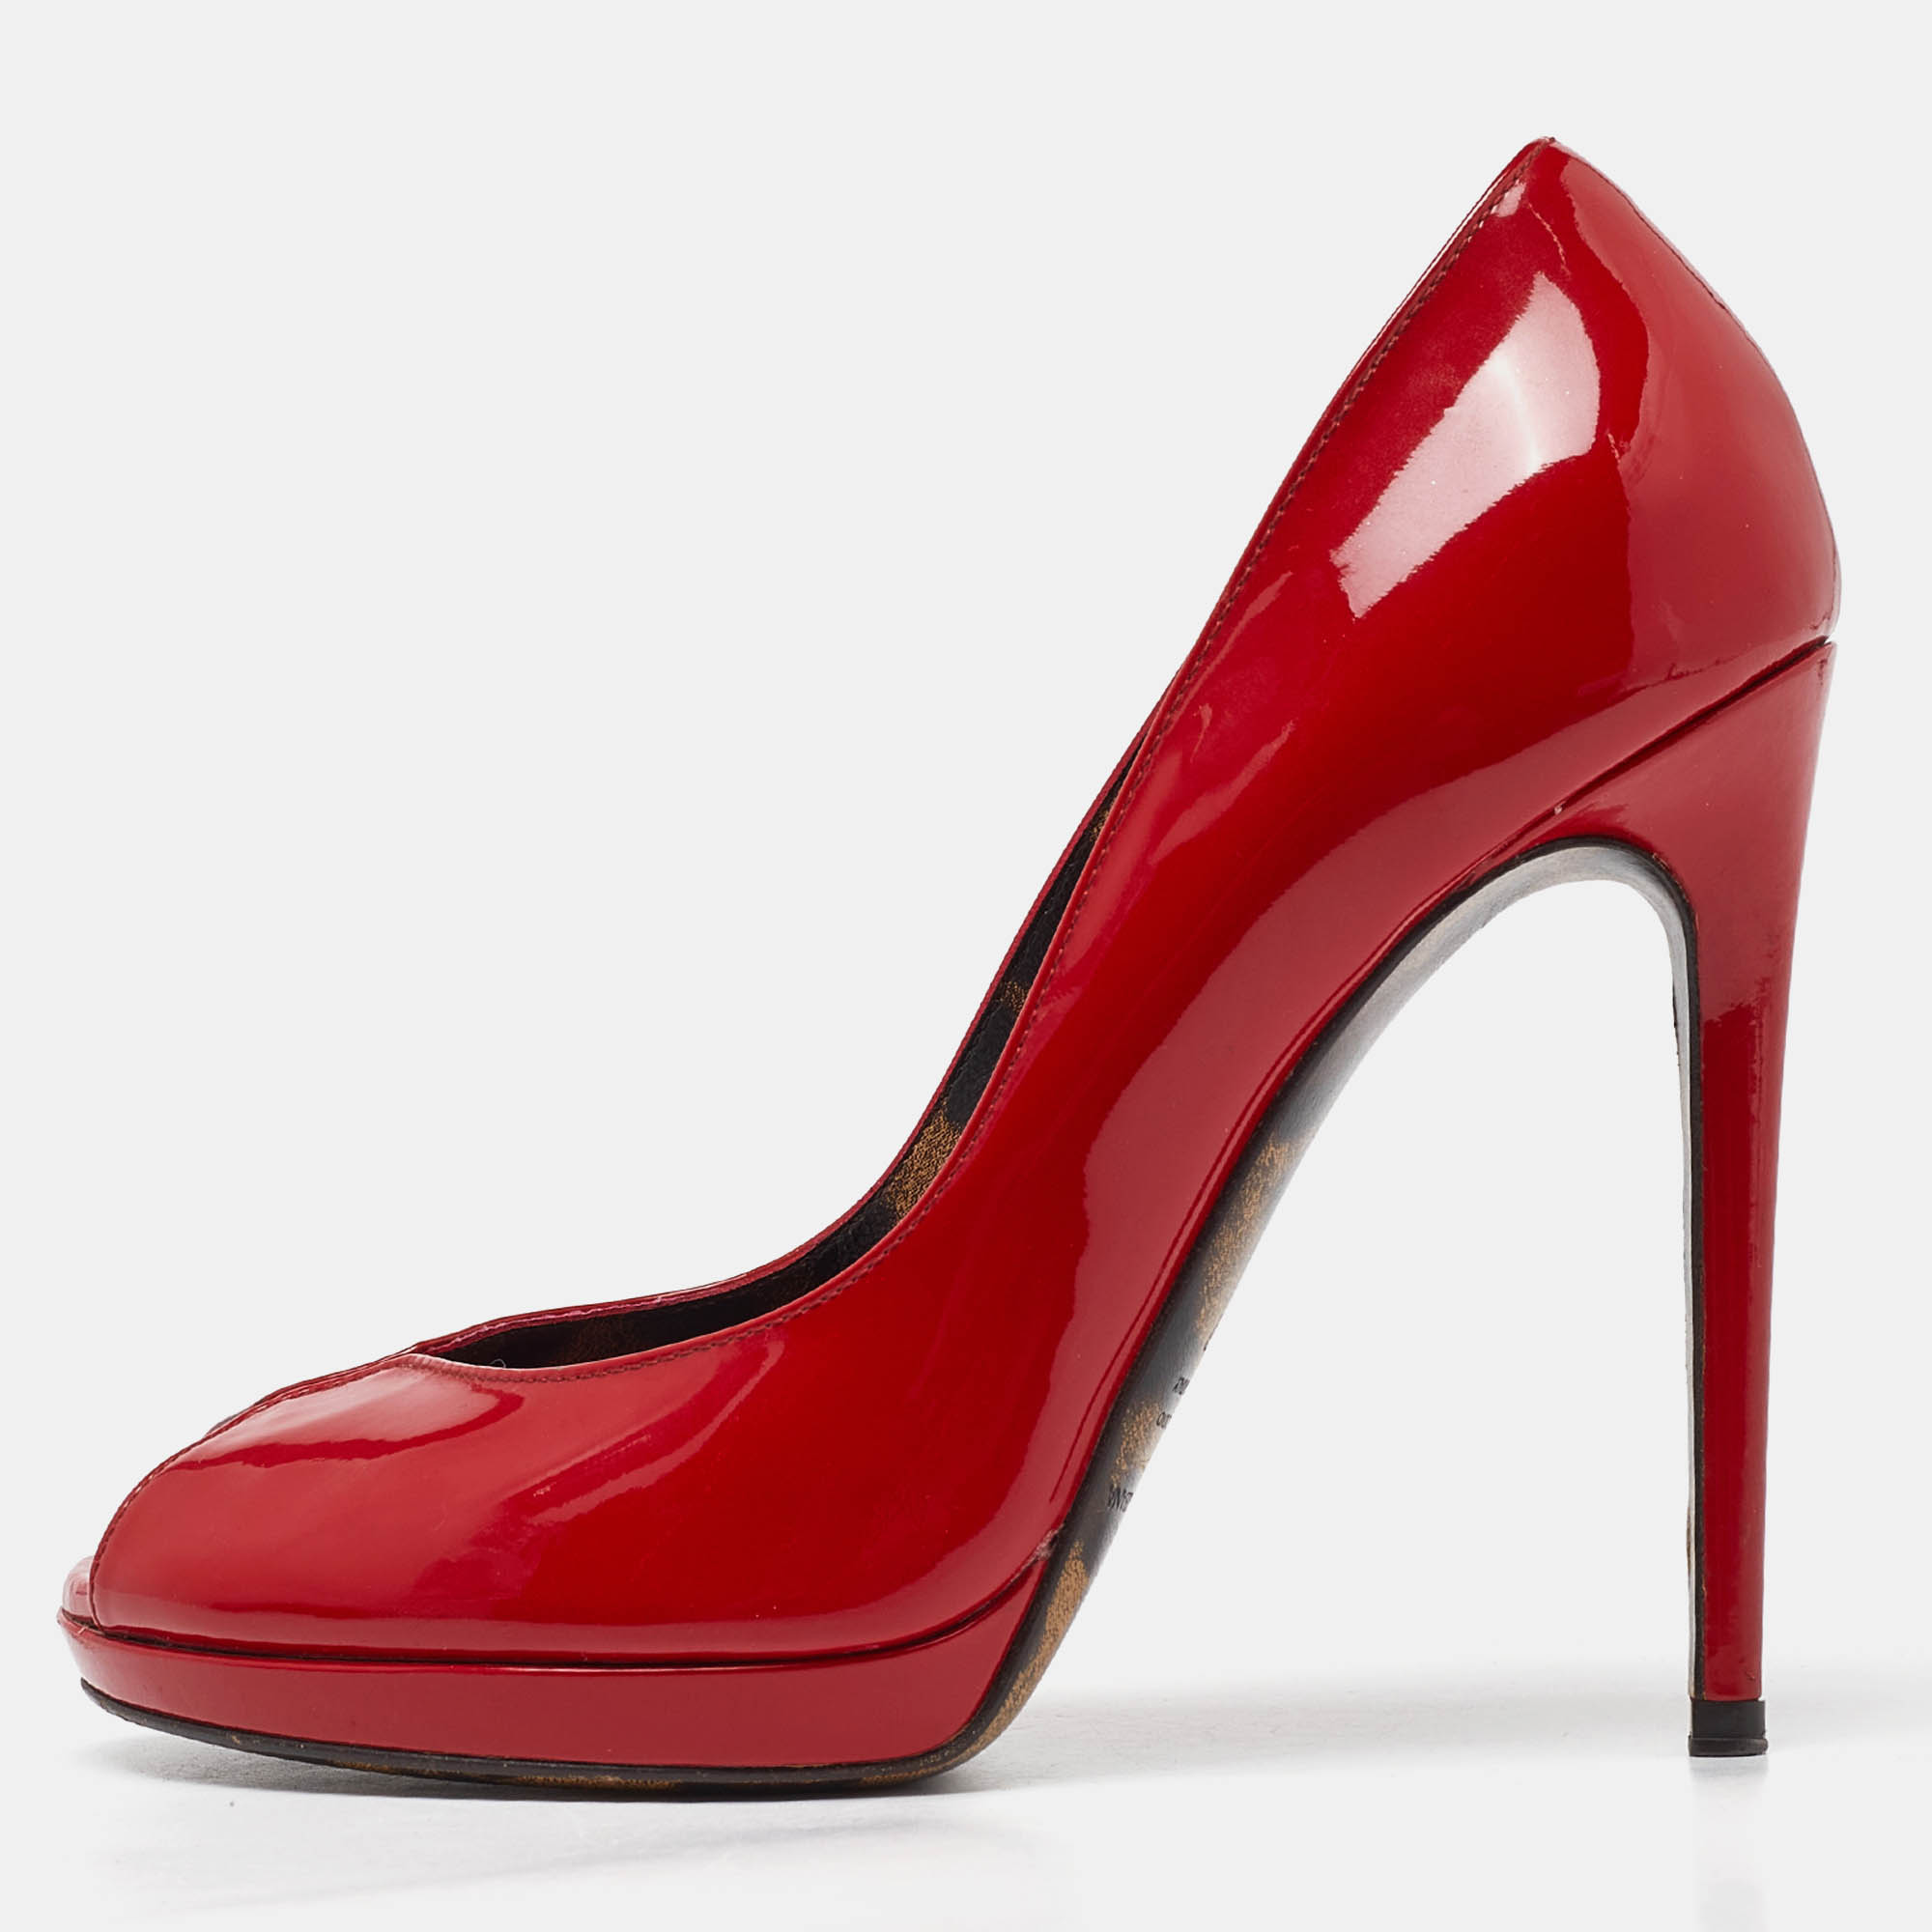 Dolce & gabbana red patent leather peep-toe platform pumps size 37